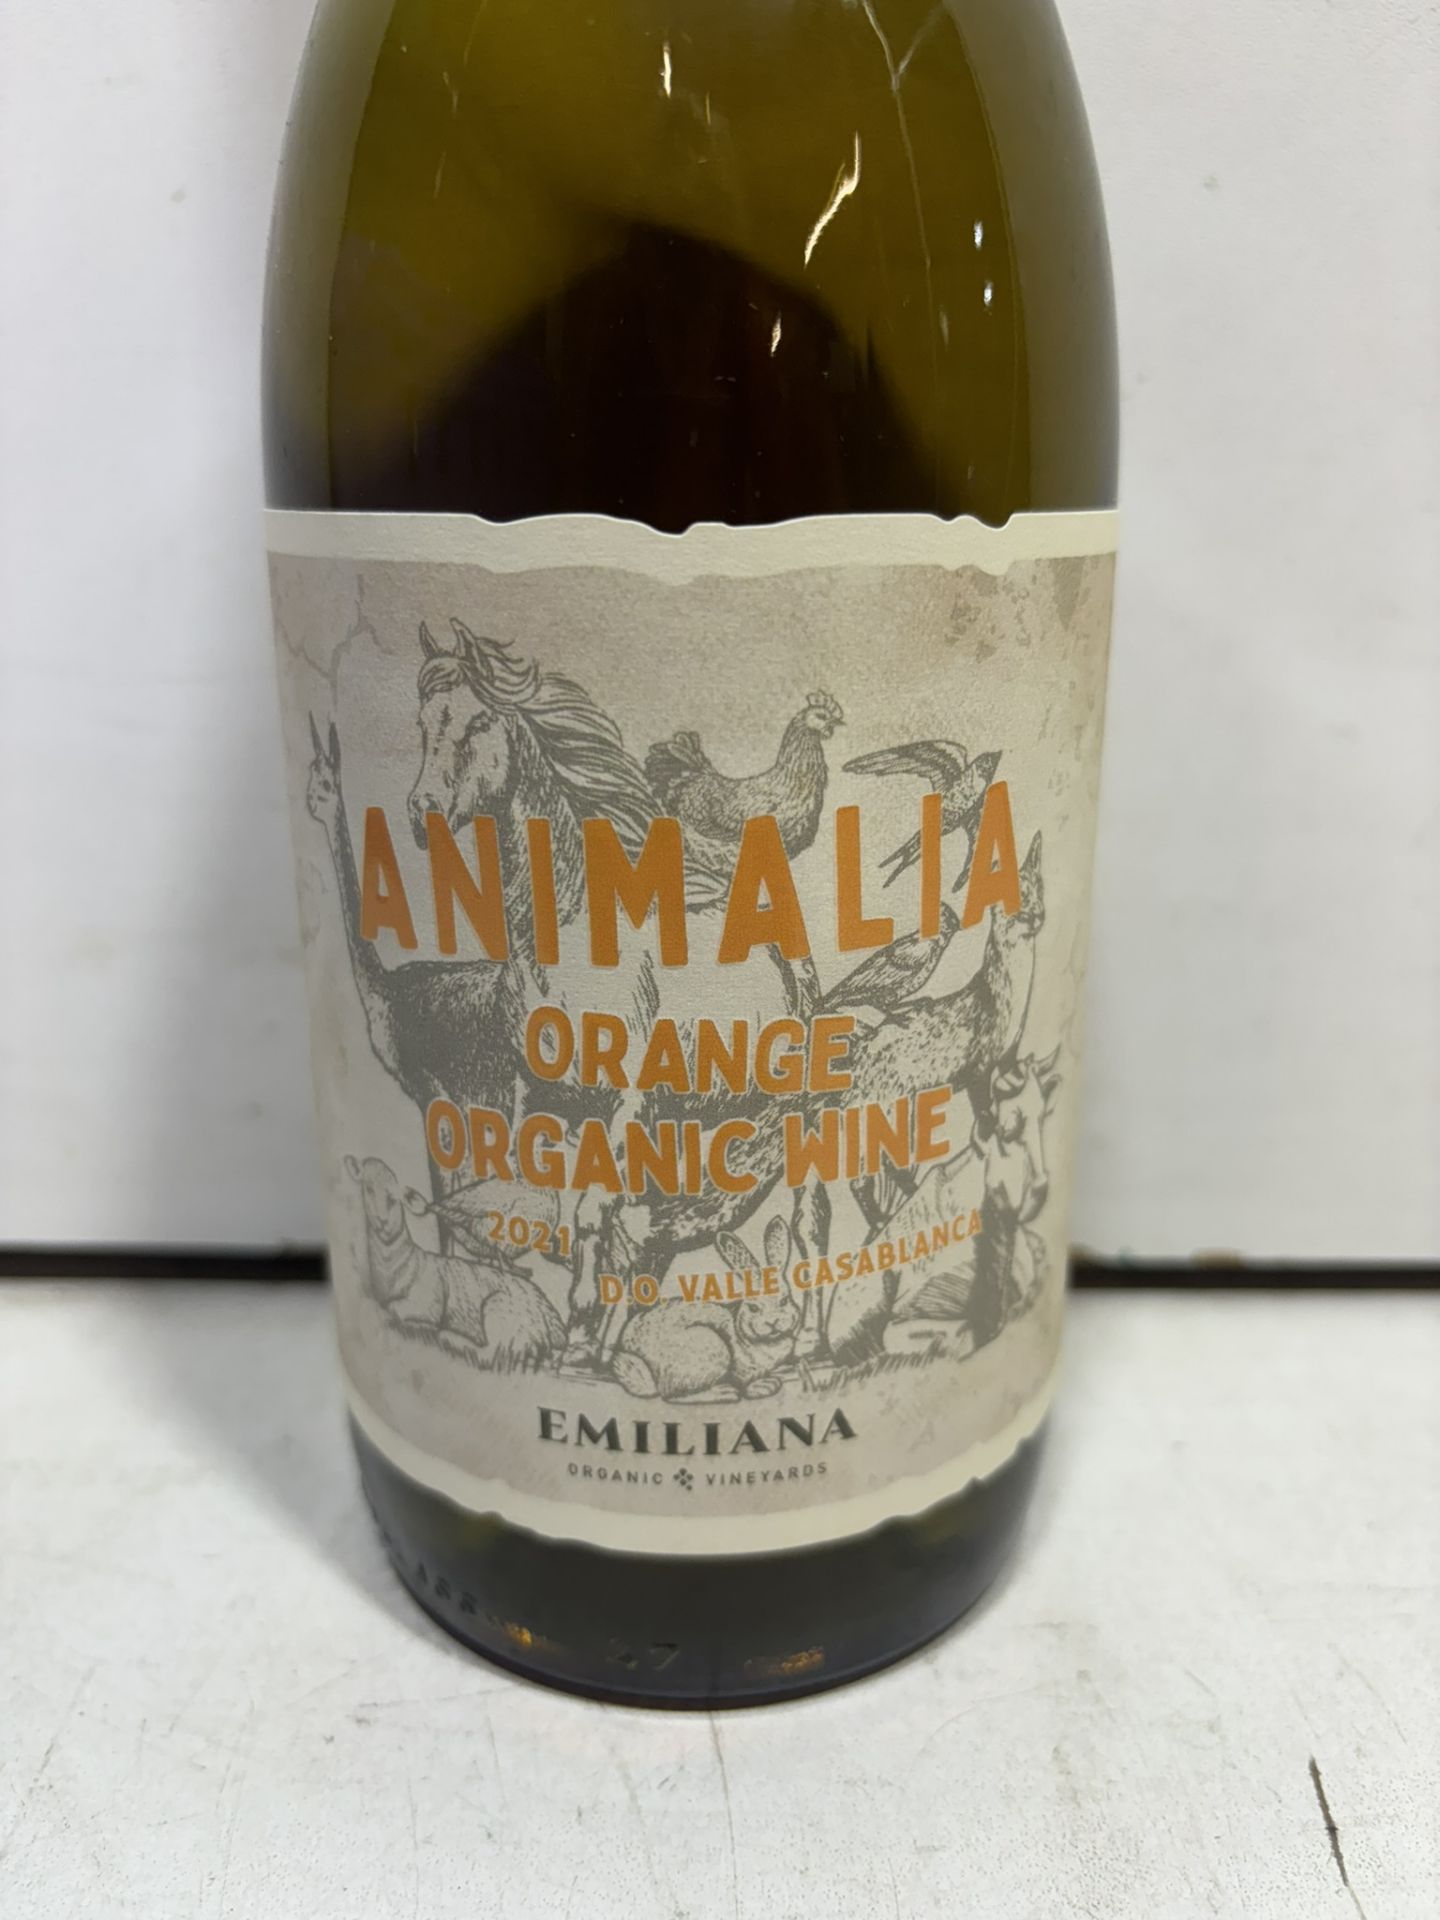 7 X Bottles Of Emiliana Animalia, Do Valle De Casablanca [Orange Wine], Organic 2021 - Image 2 of 4